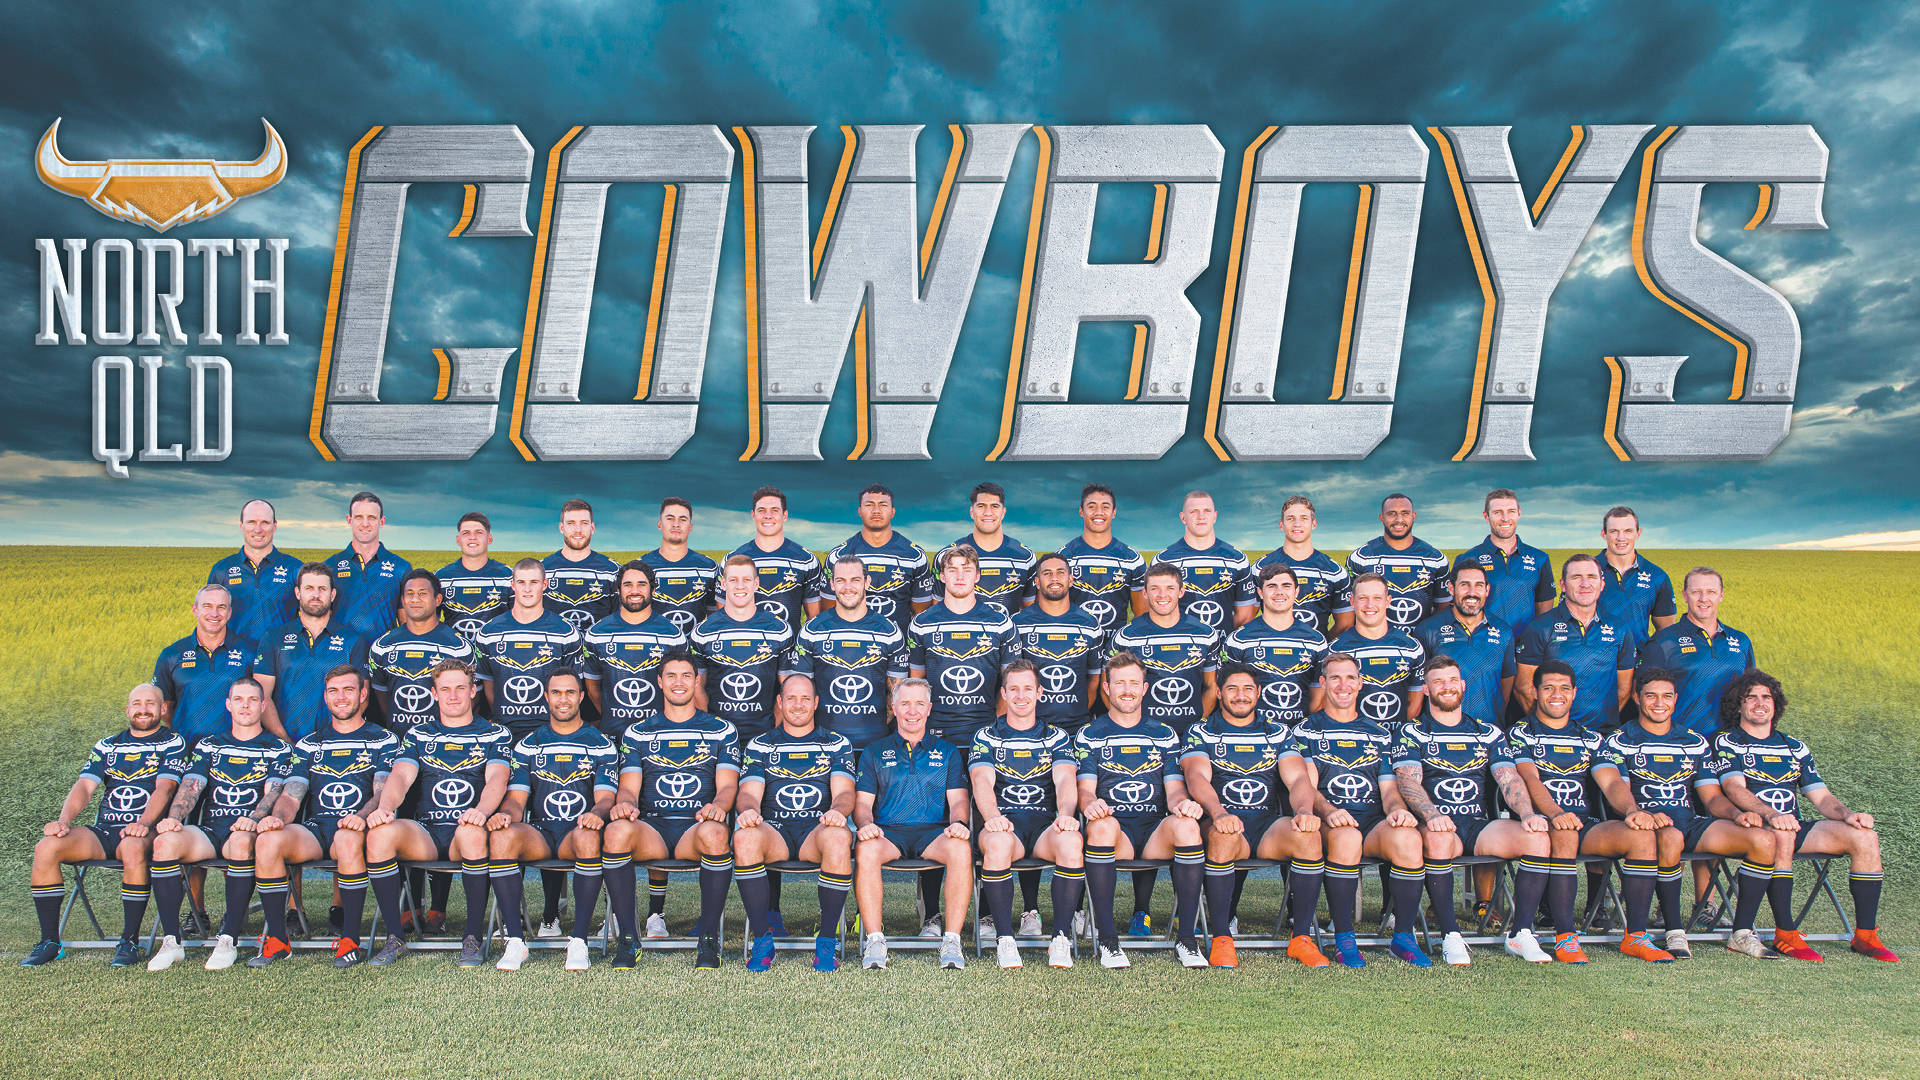 NRL Cowboys Wallpaper